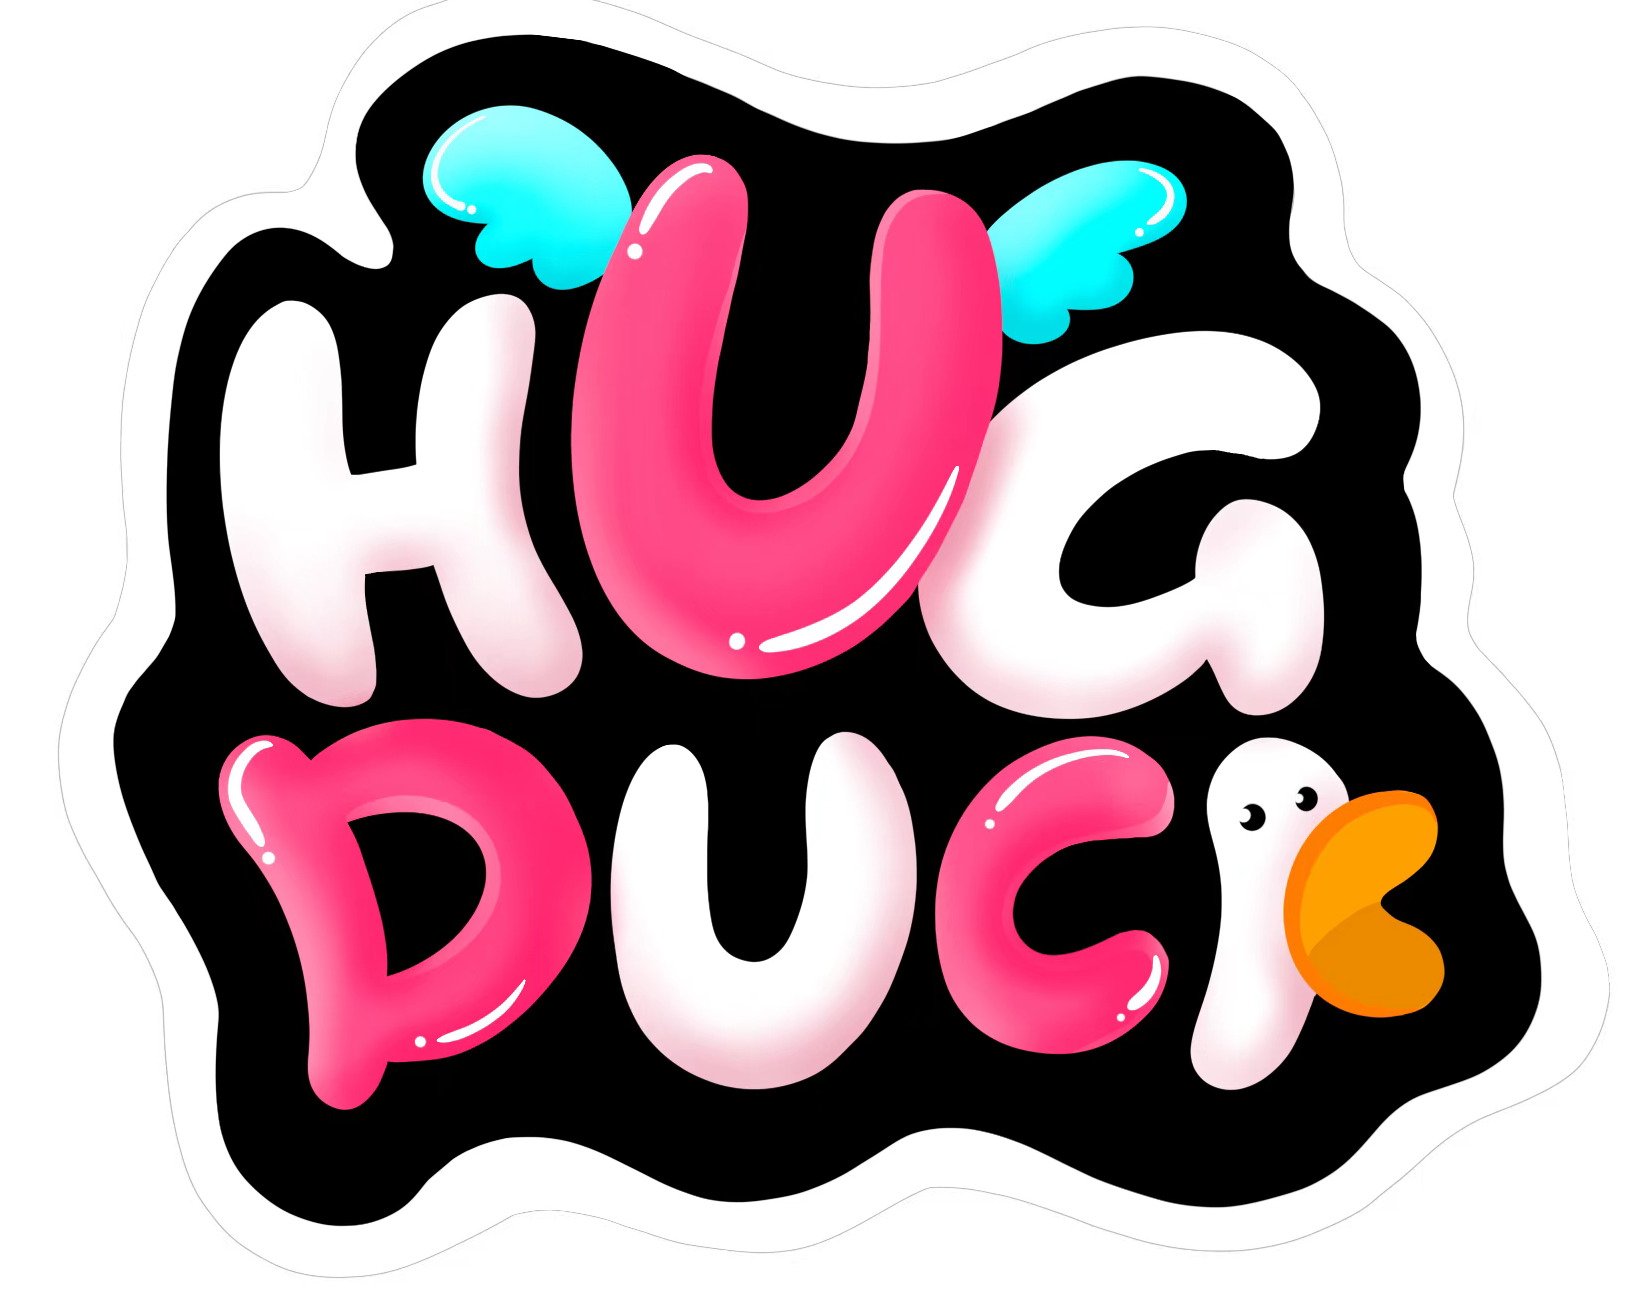 Hug Duck Club